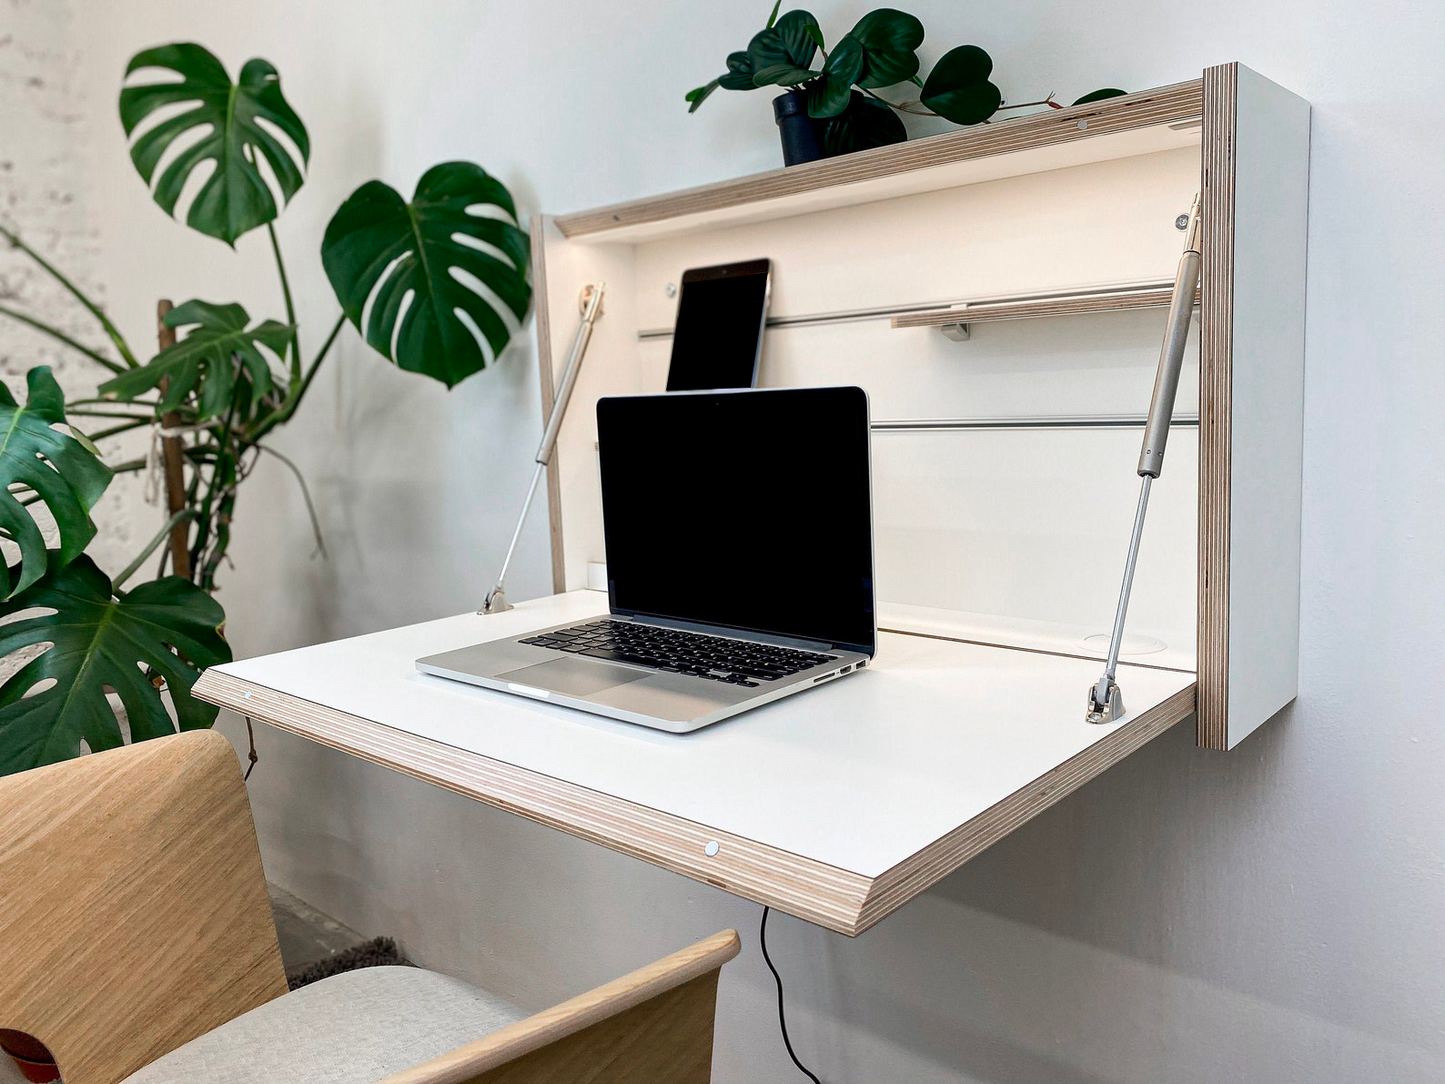 Folding wall desk with shelves - White